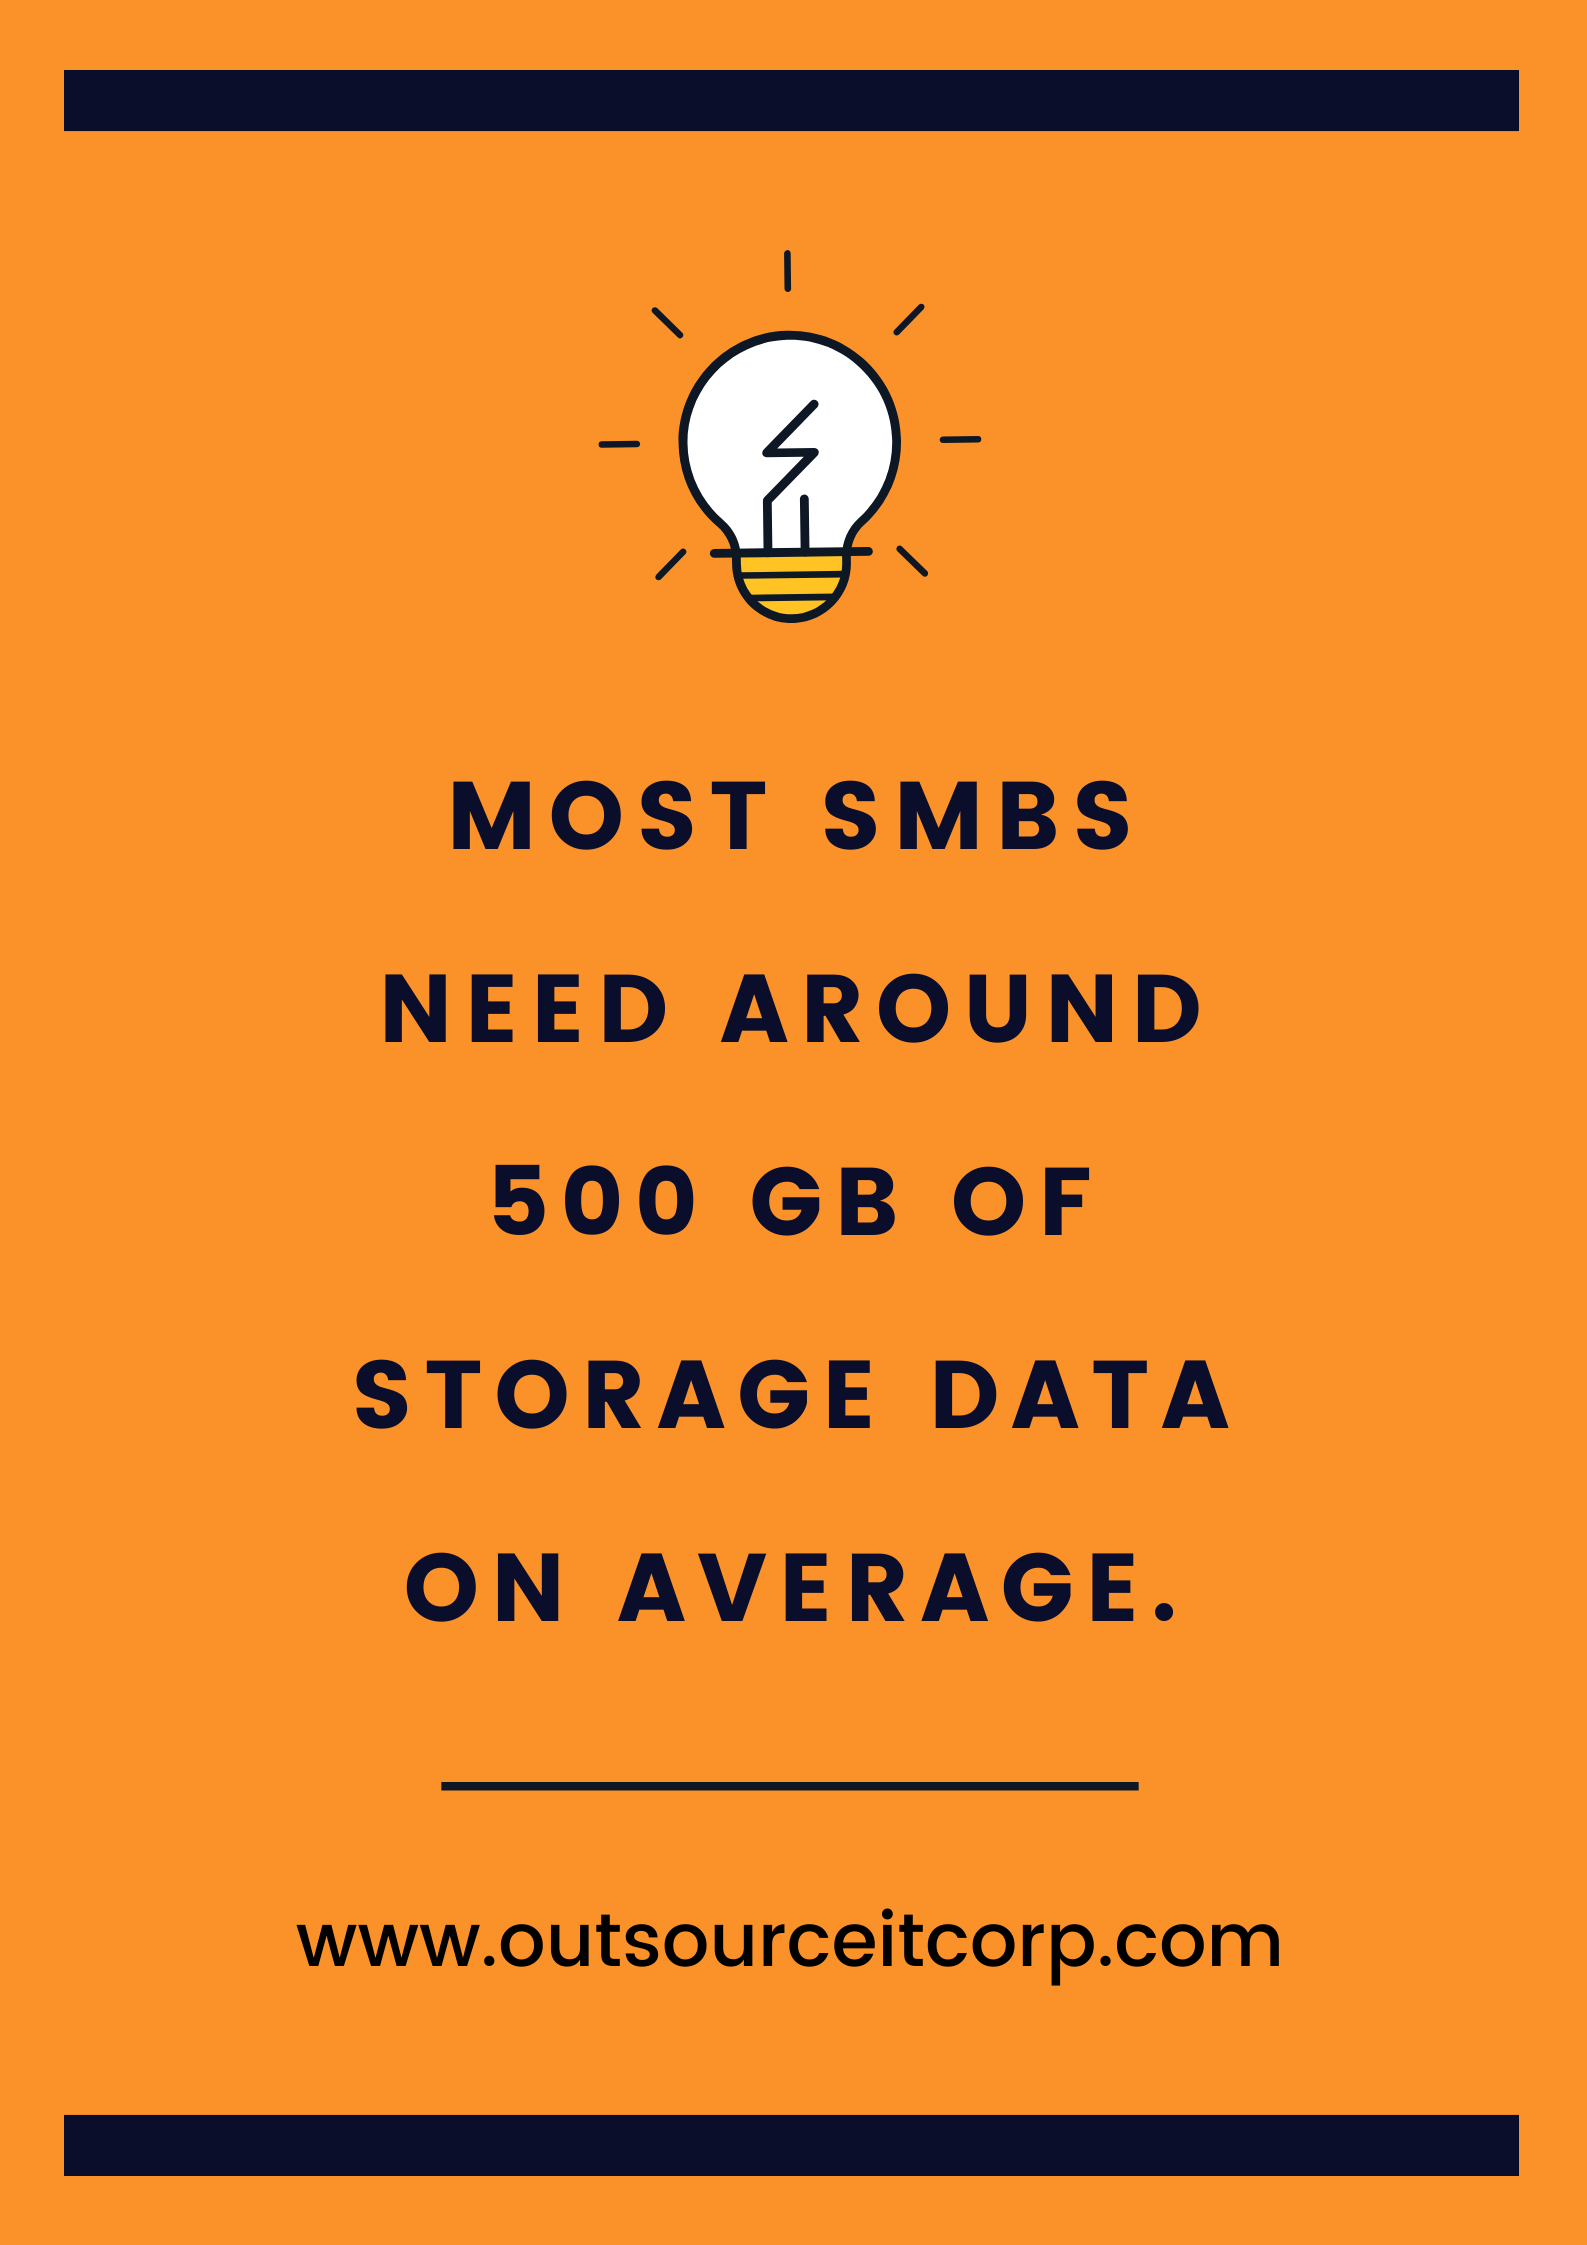 Data storage infographic